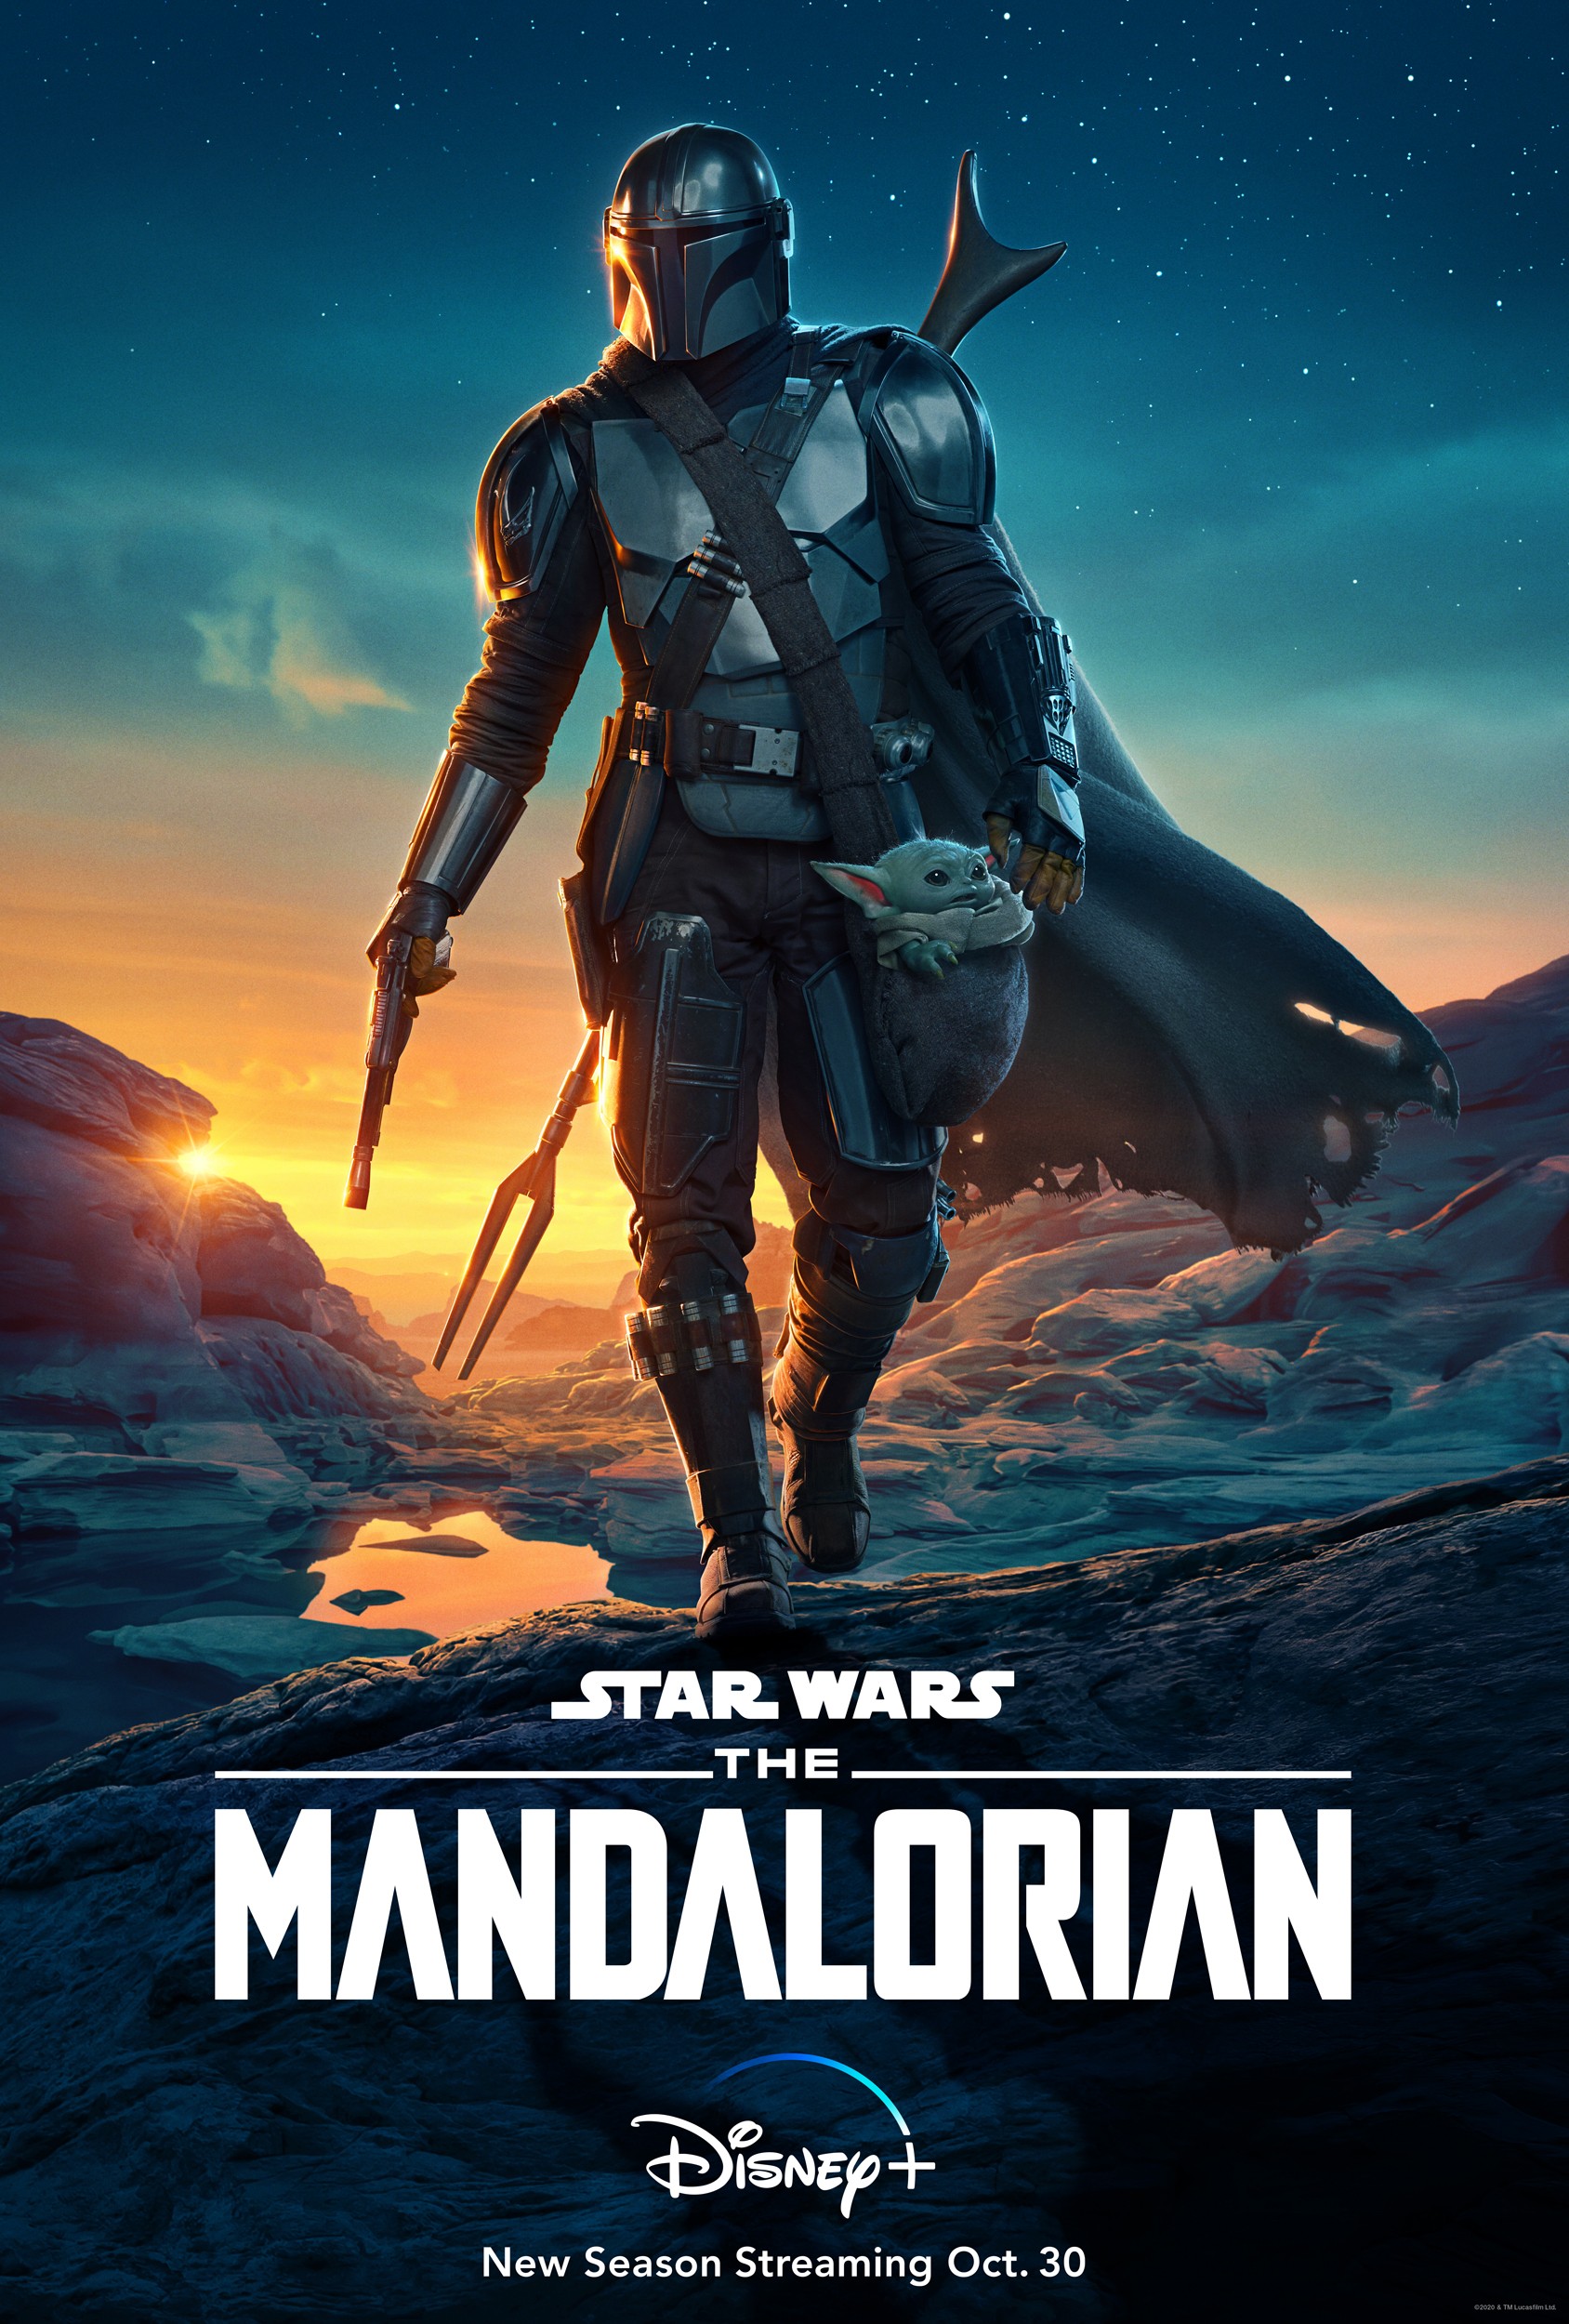 The Mandalorian Chapter 9: The Marshal (TV Episode 2020) - IMDb